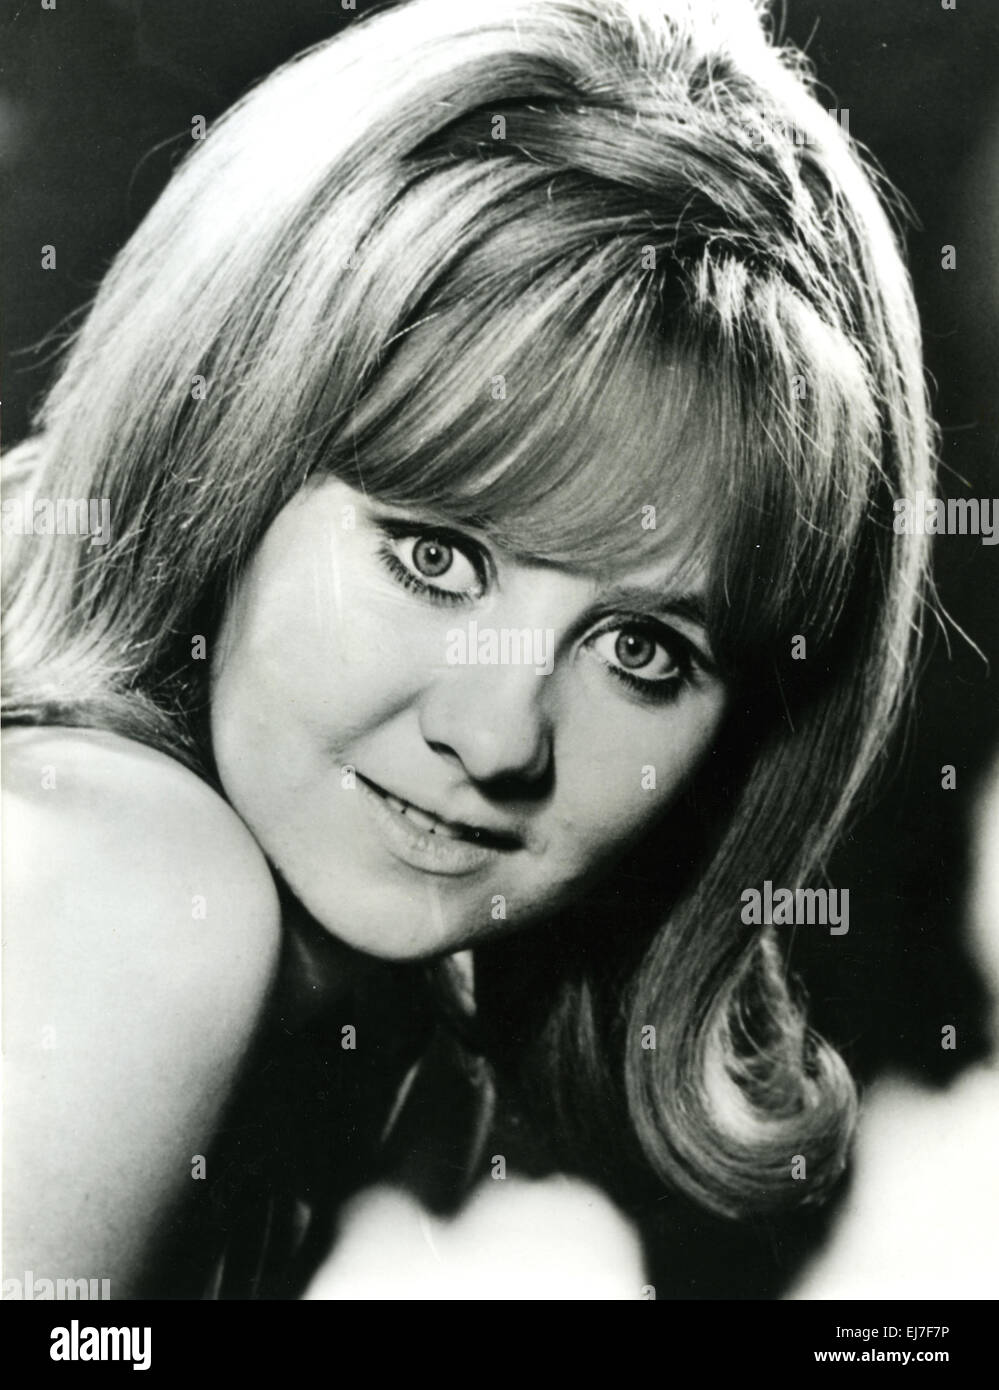 LULU Promotional photo of Scottish pop singer about 1967 Stock Photo ...